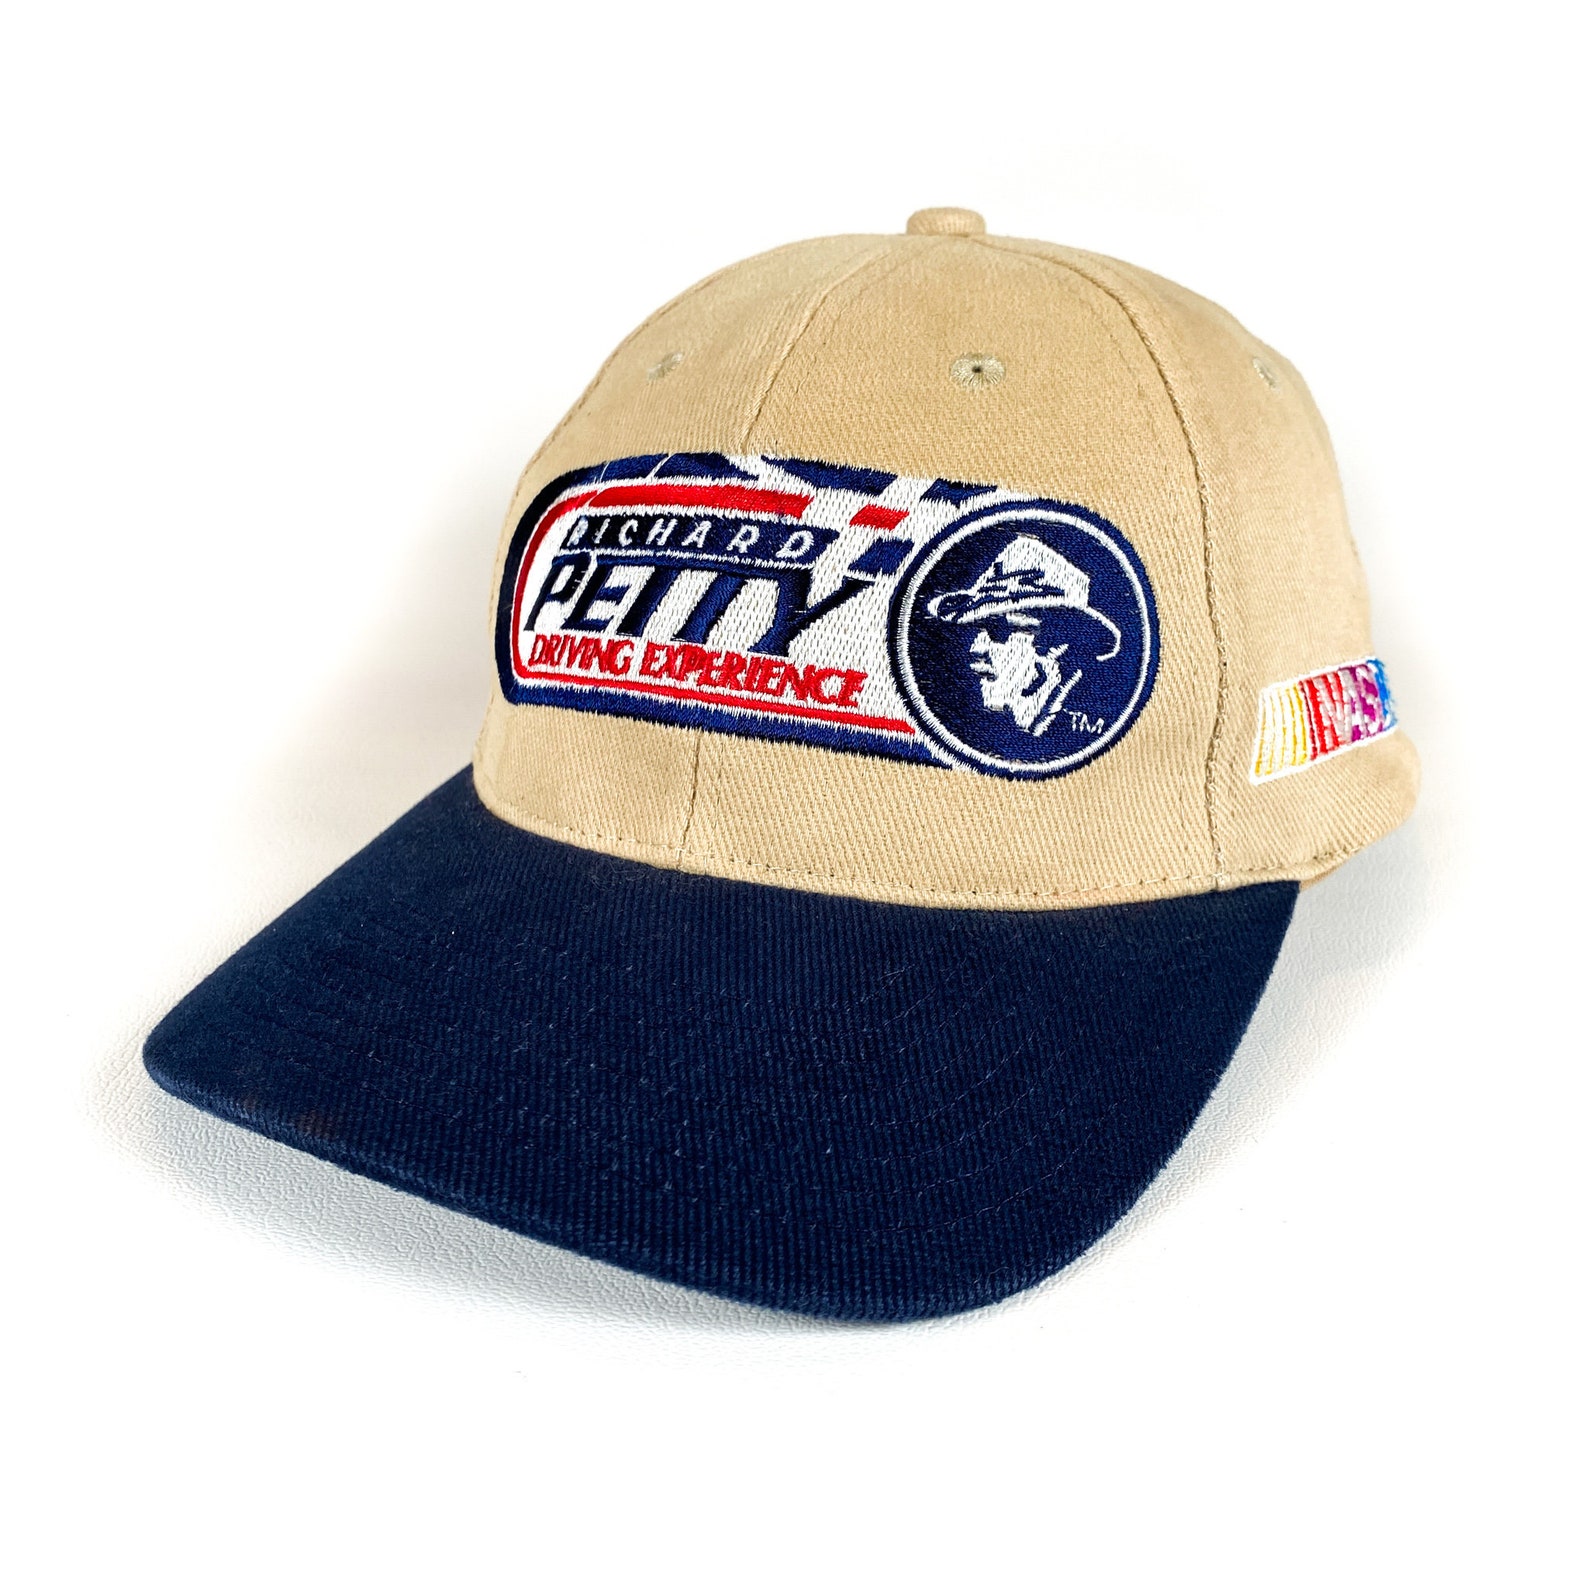 Vintage Richard Petty Hat 90s Richard Petty cap driving | Etsy